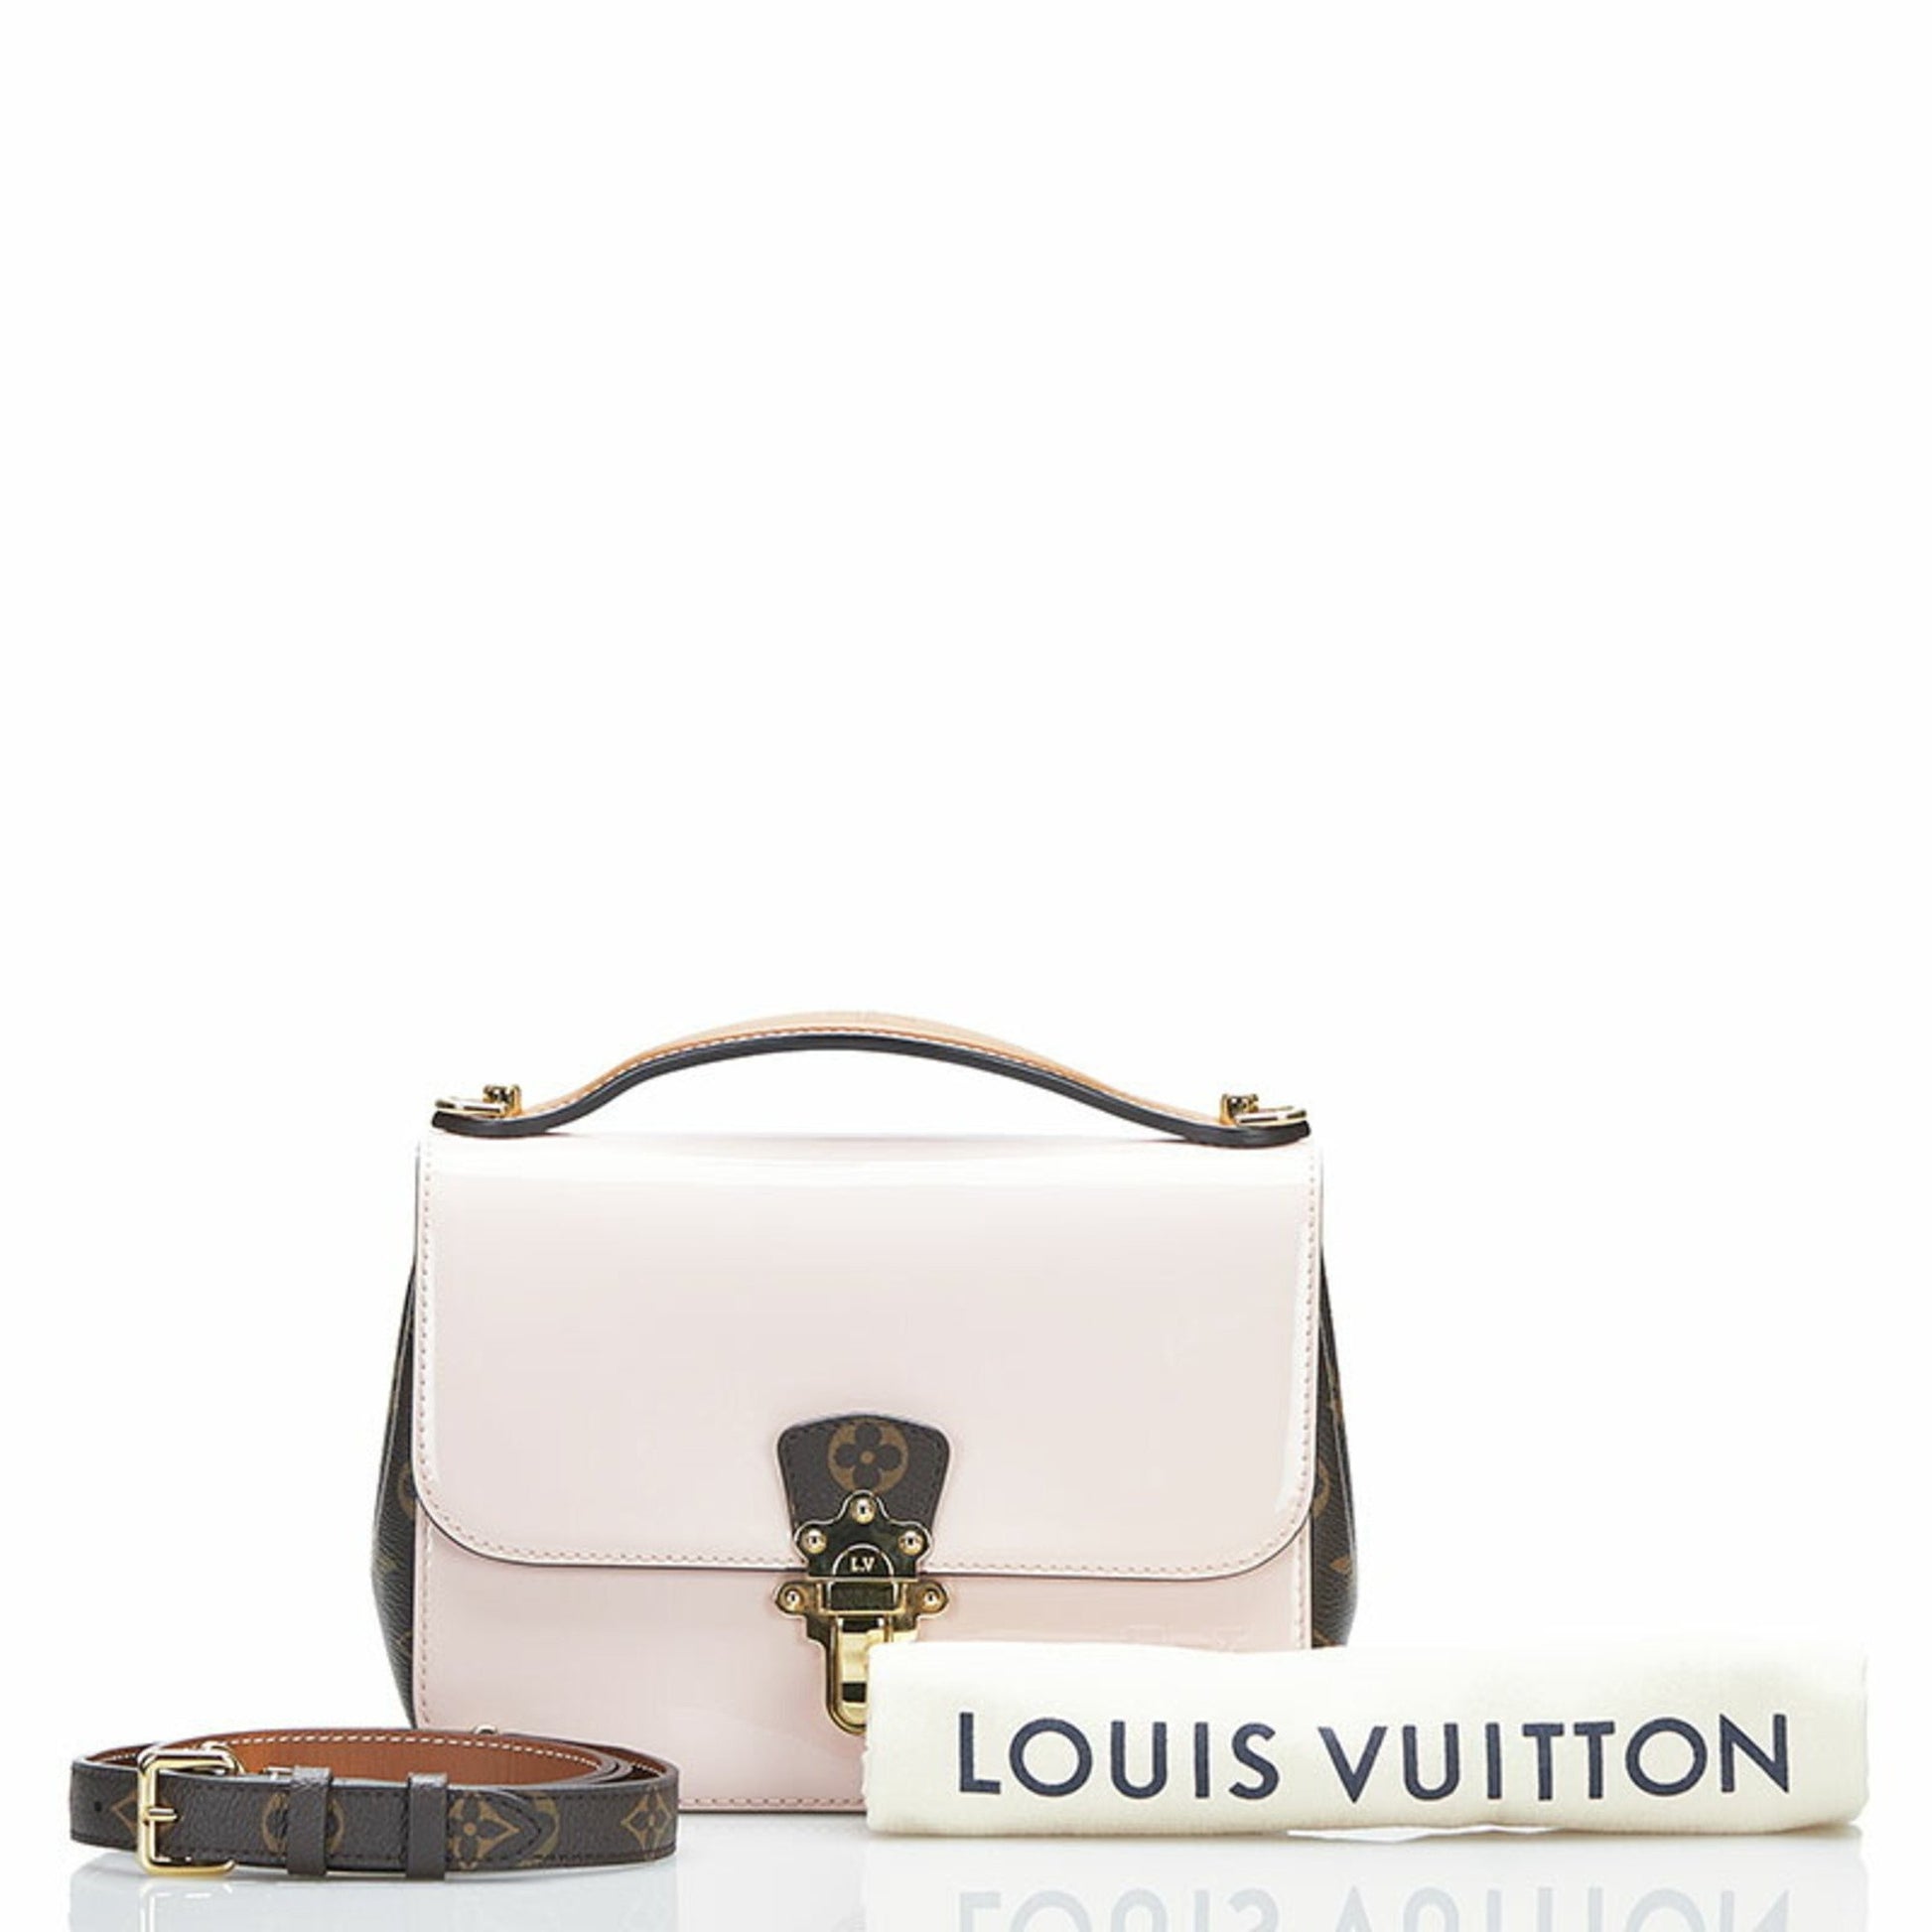 LOUIS VUITTON Cherrywood BB 2way shoulder bag handbag M51952